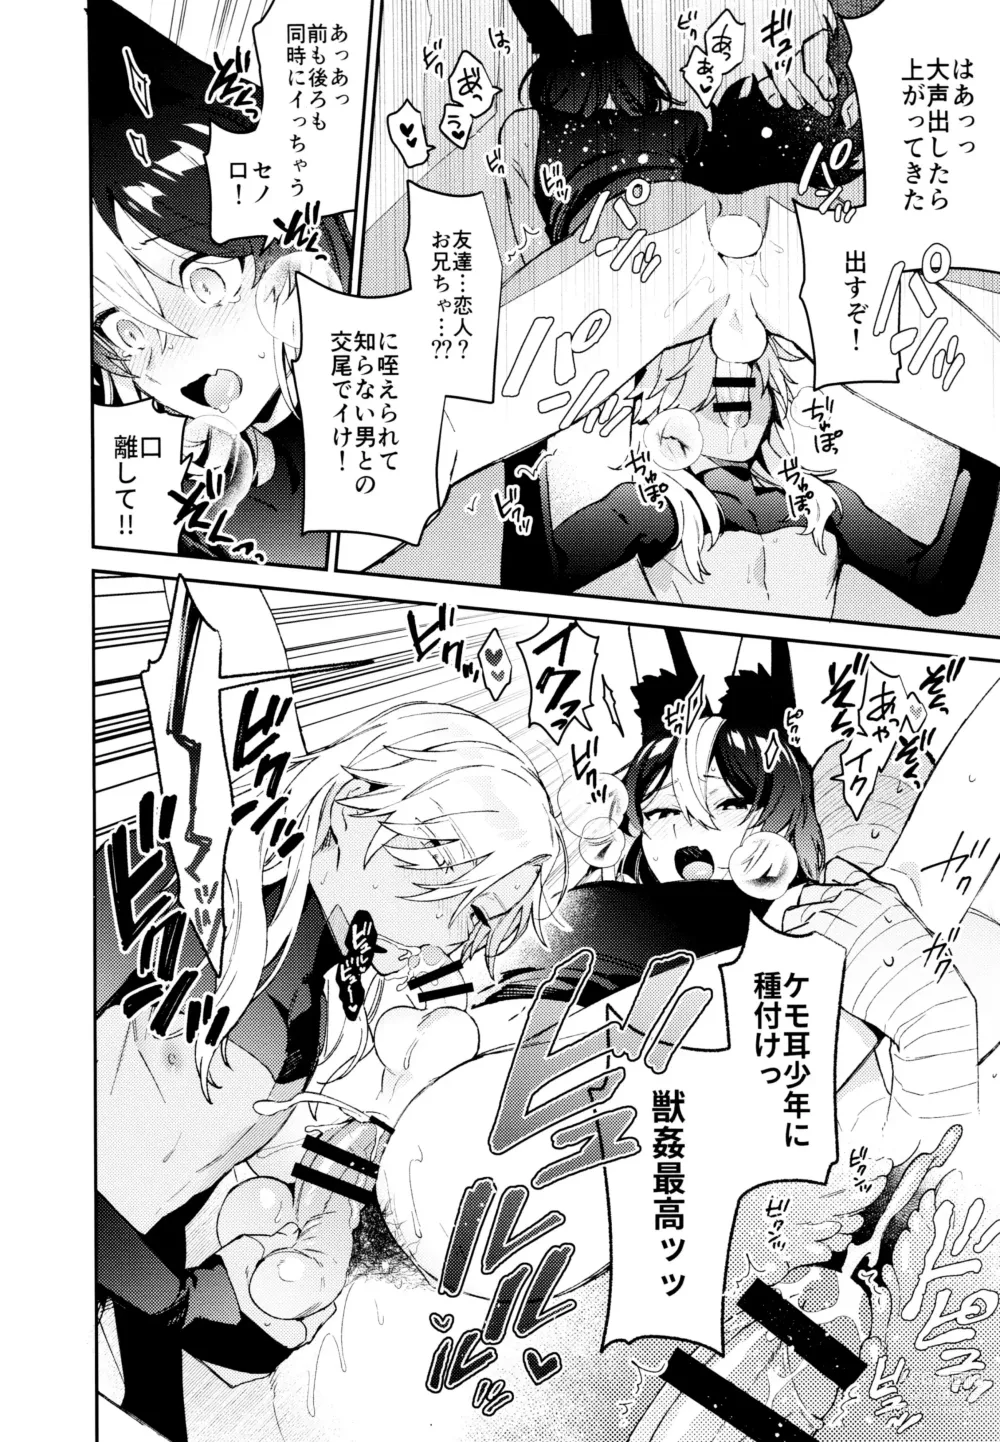 Page 46 of doujinshi ORE:CN